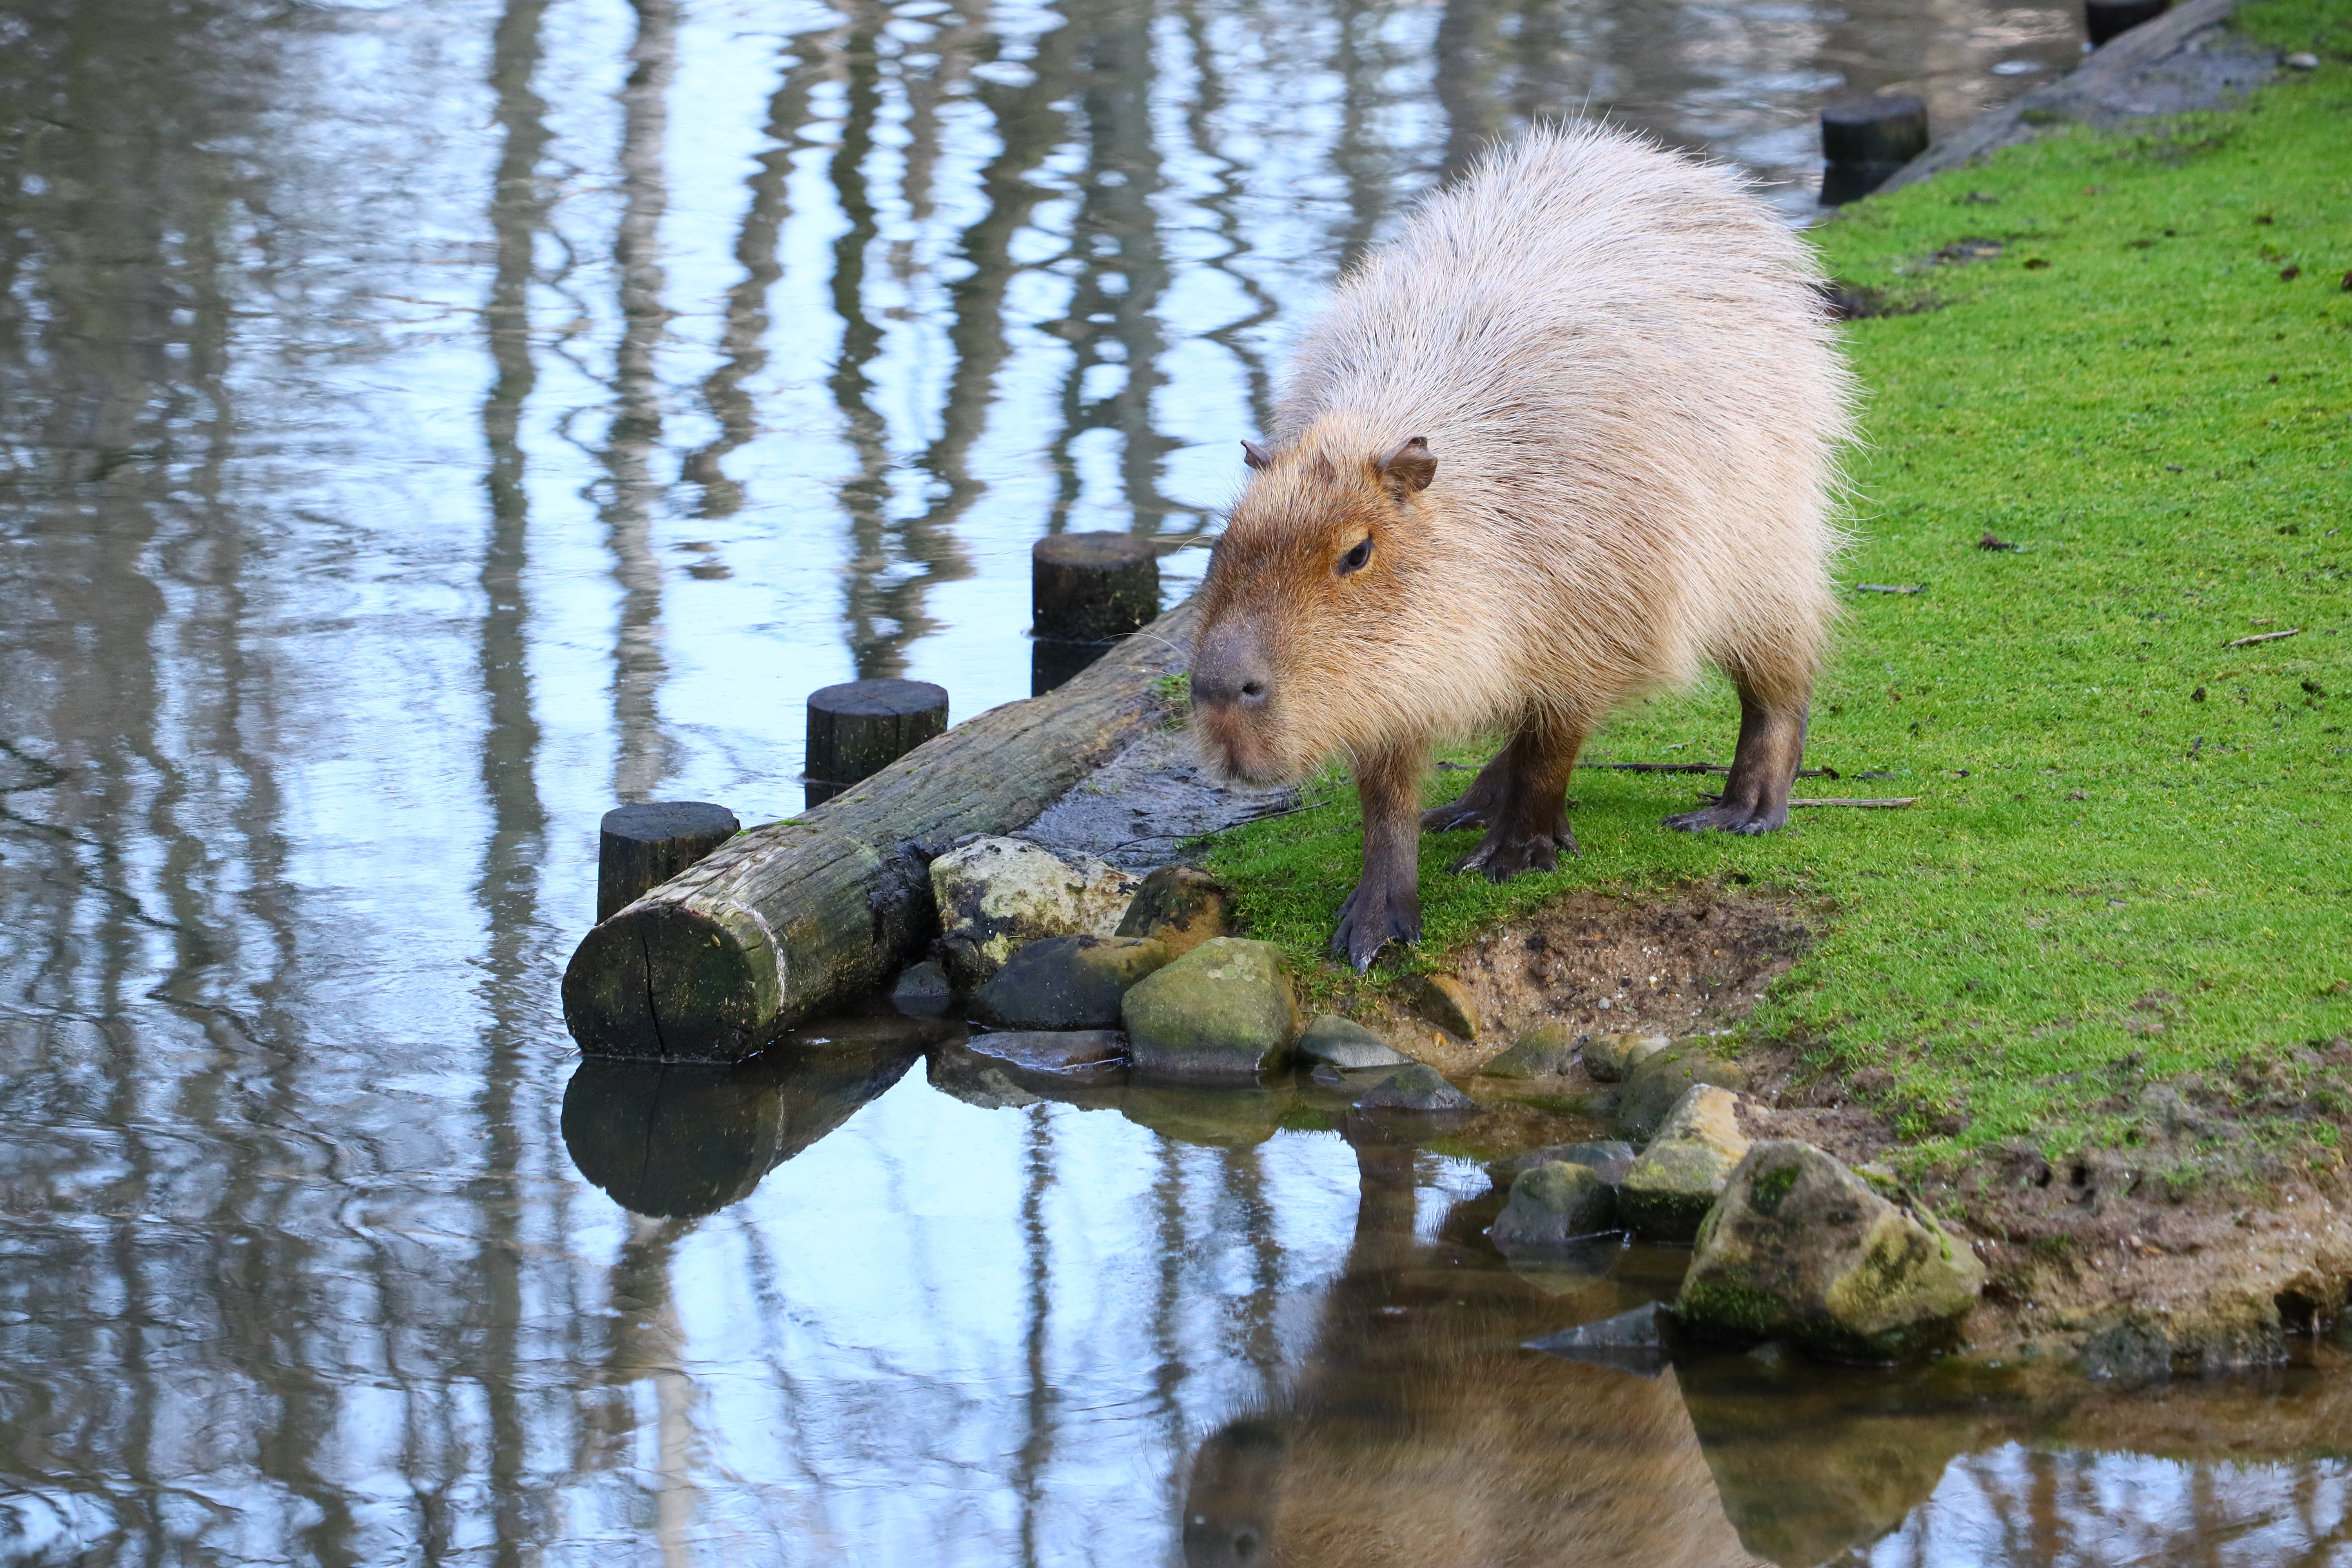 A capybara walking on grass near water